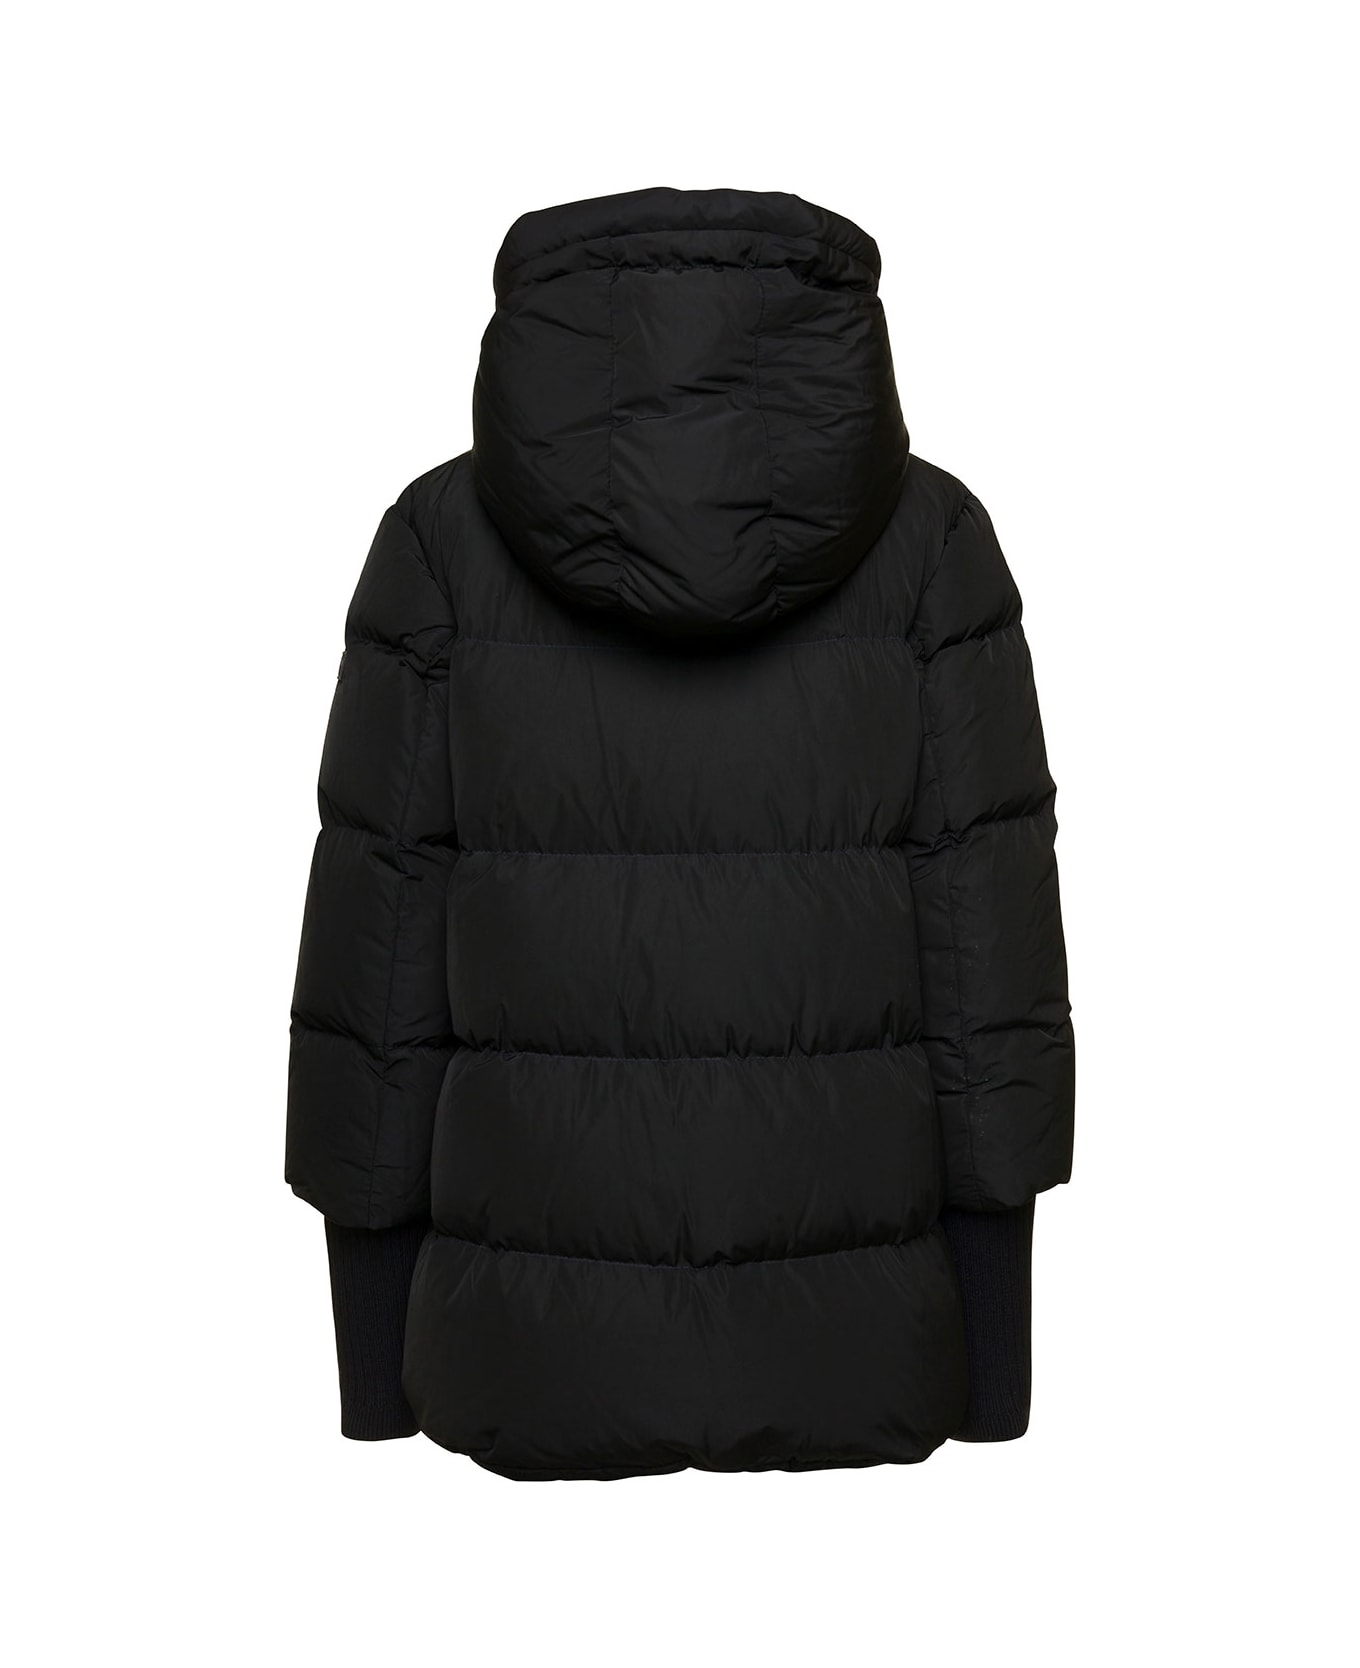 TATRAS 'azara' Black Hooded Down Jacket With Logo Detail In Nylon Woman - Black コート